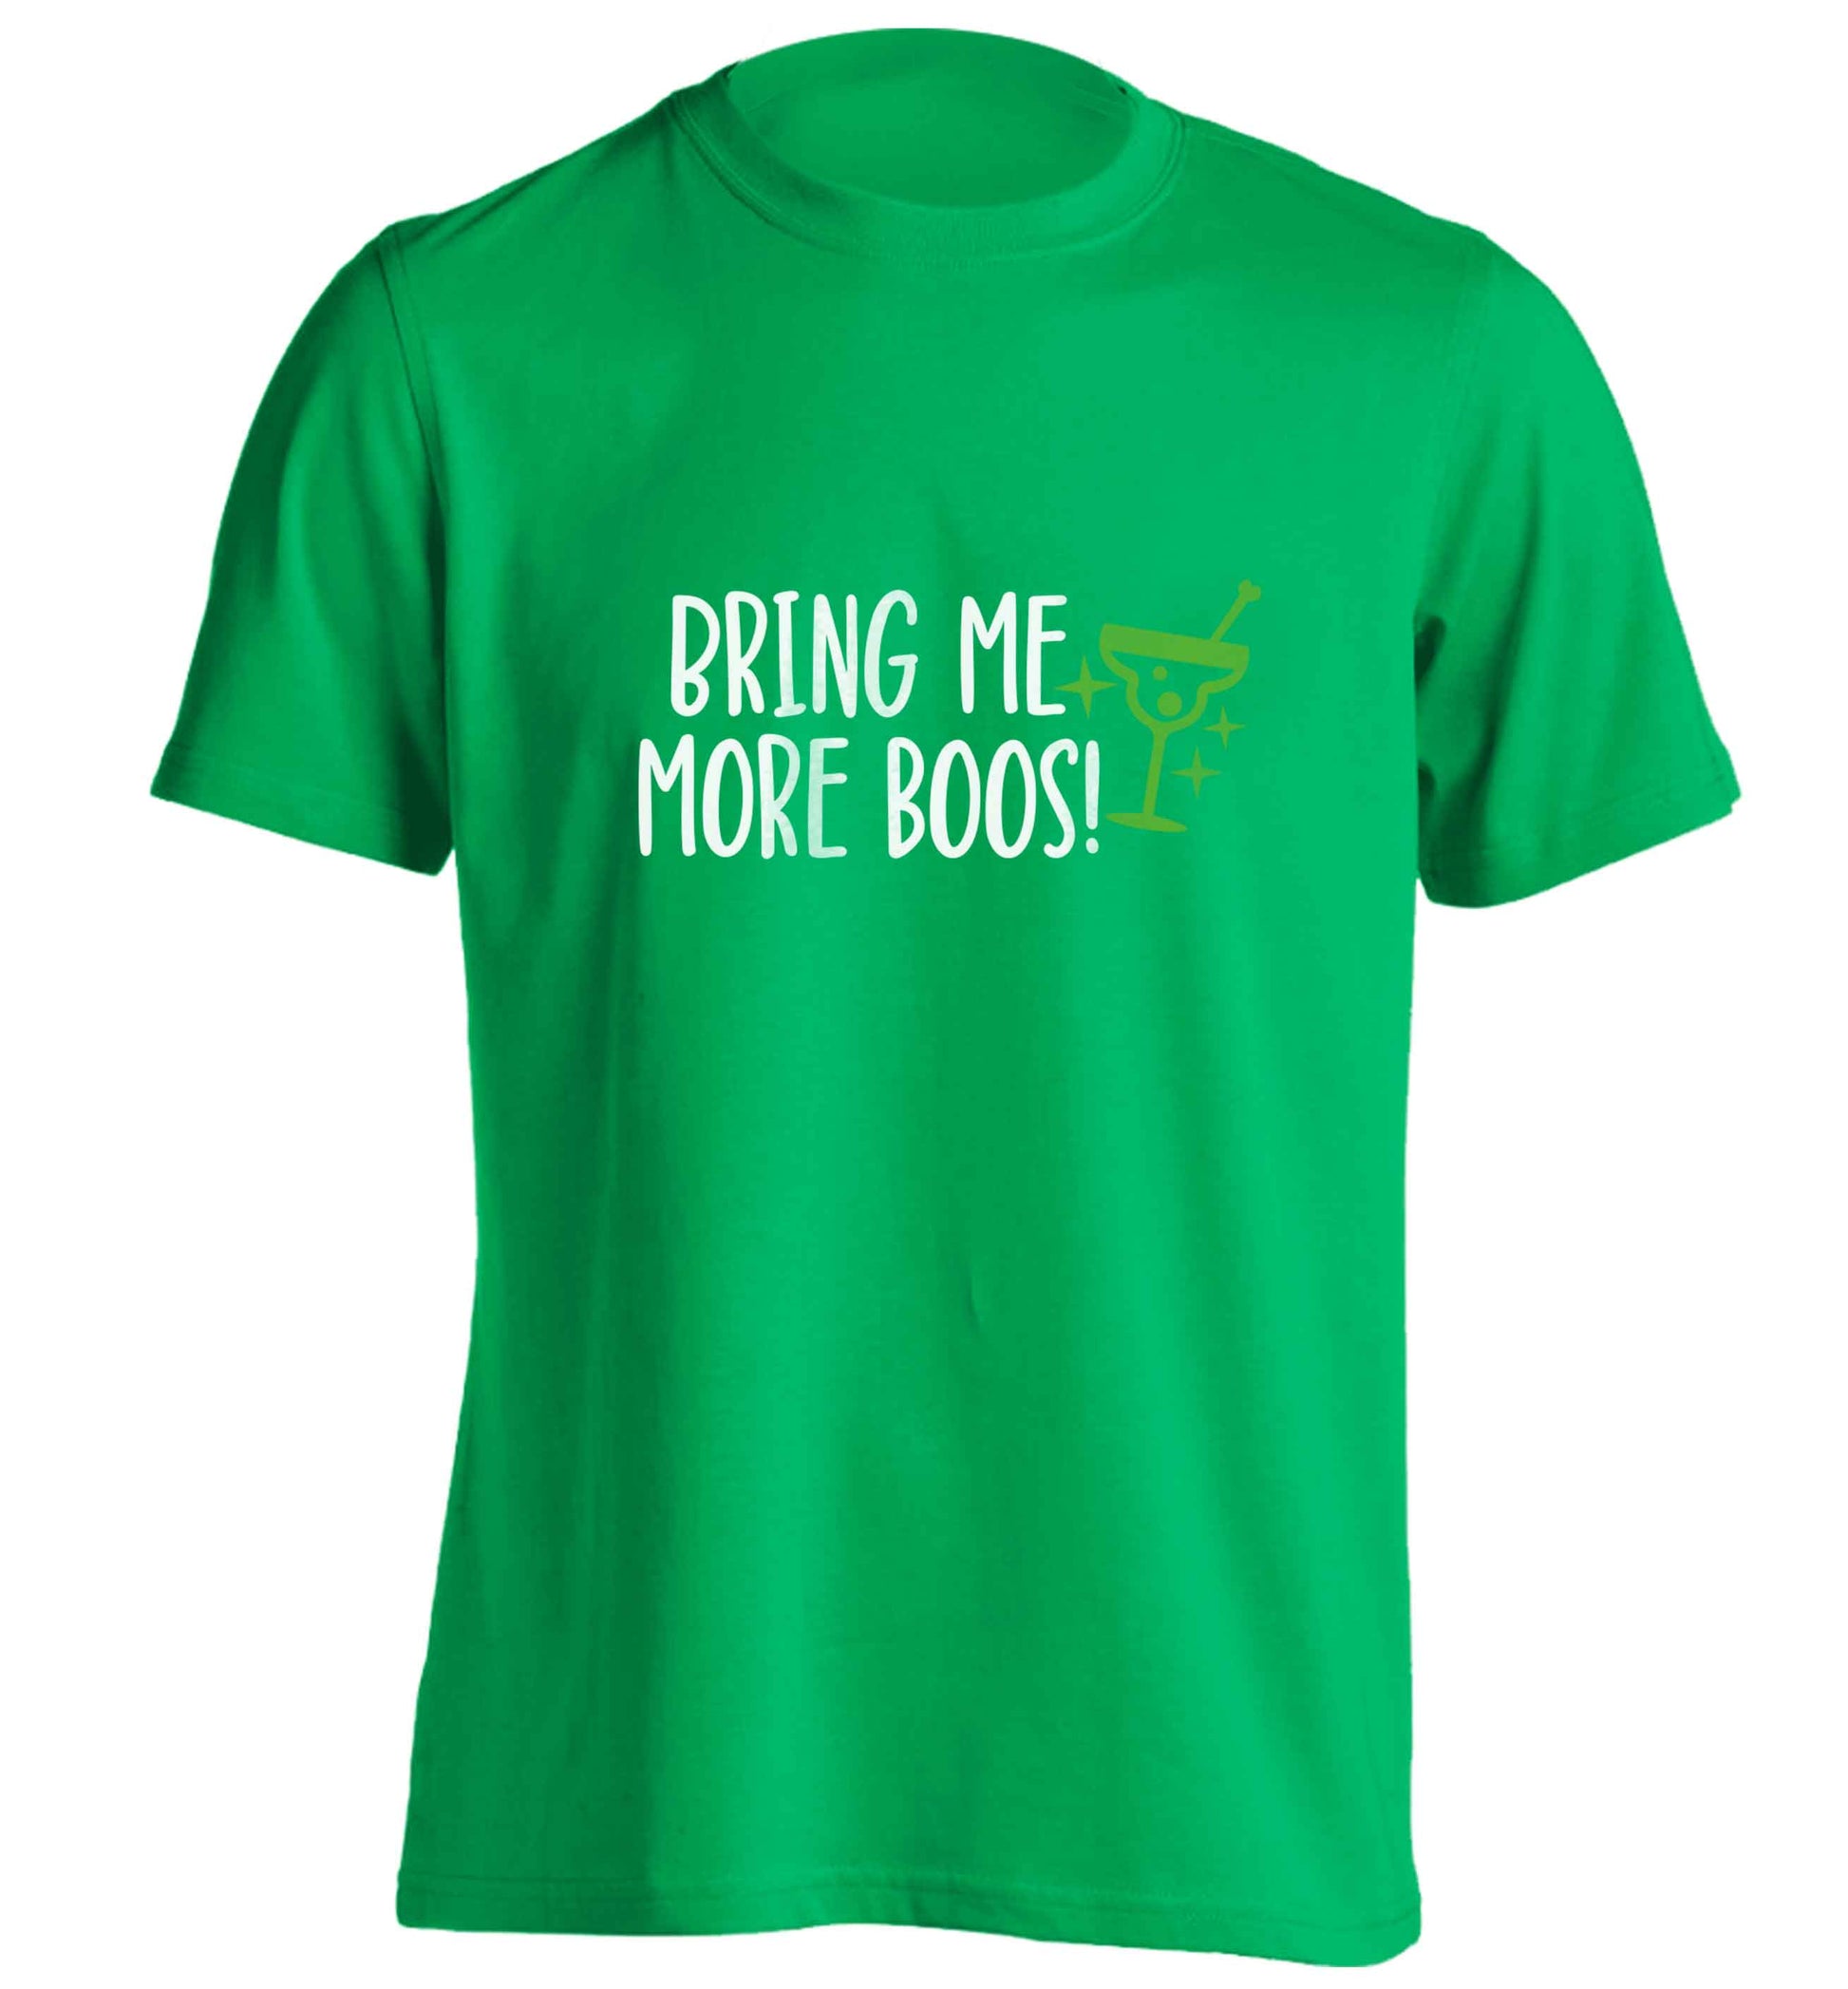 Bring me more boos adults unisex green Tshirt 2XL